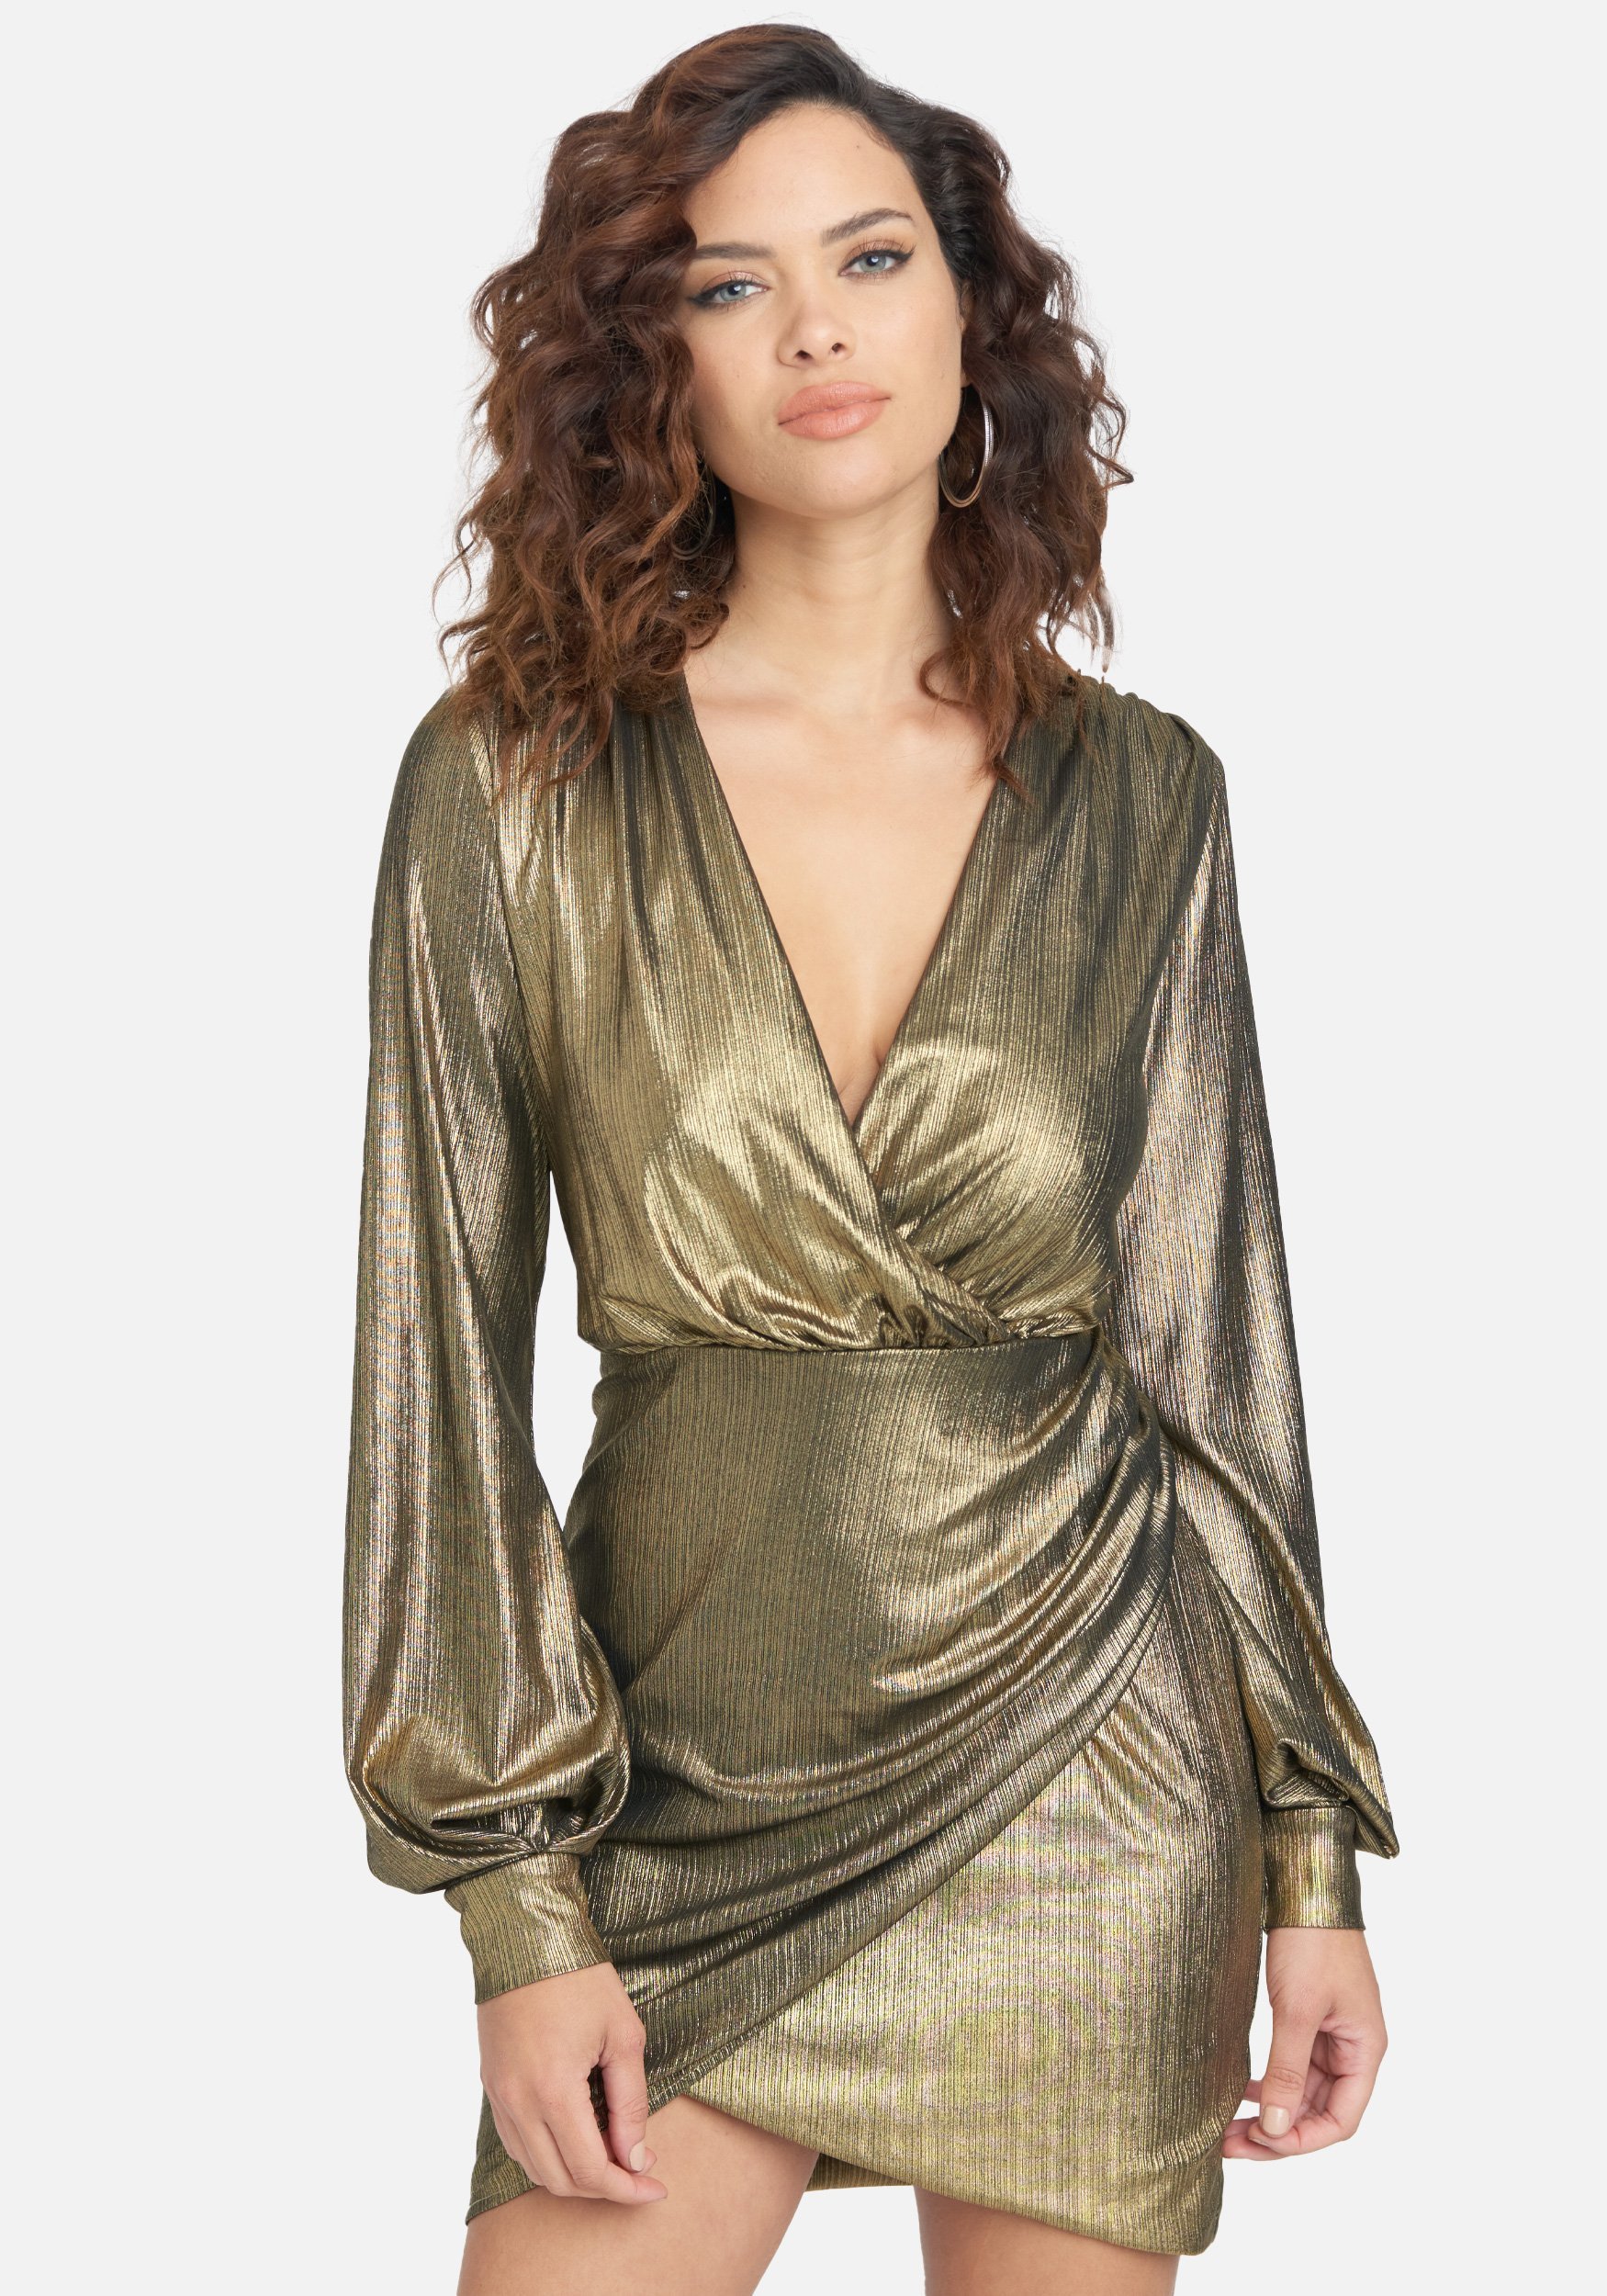 Bebe Women's Gold Metallic Mini Dress, Size Medium Spandex